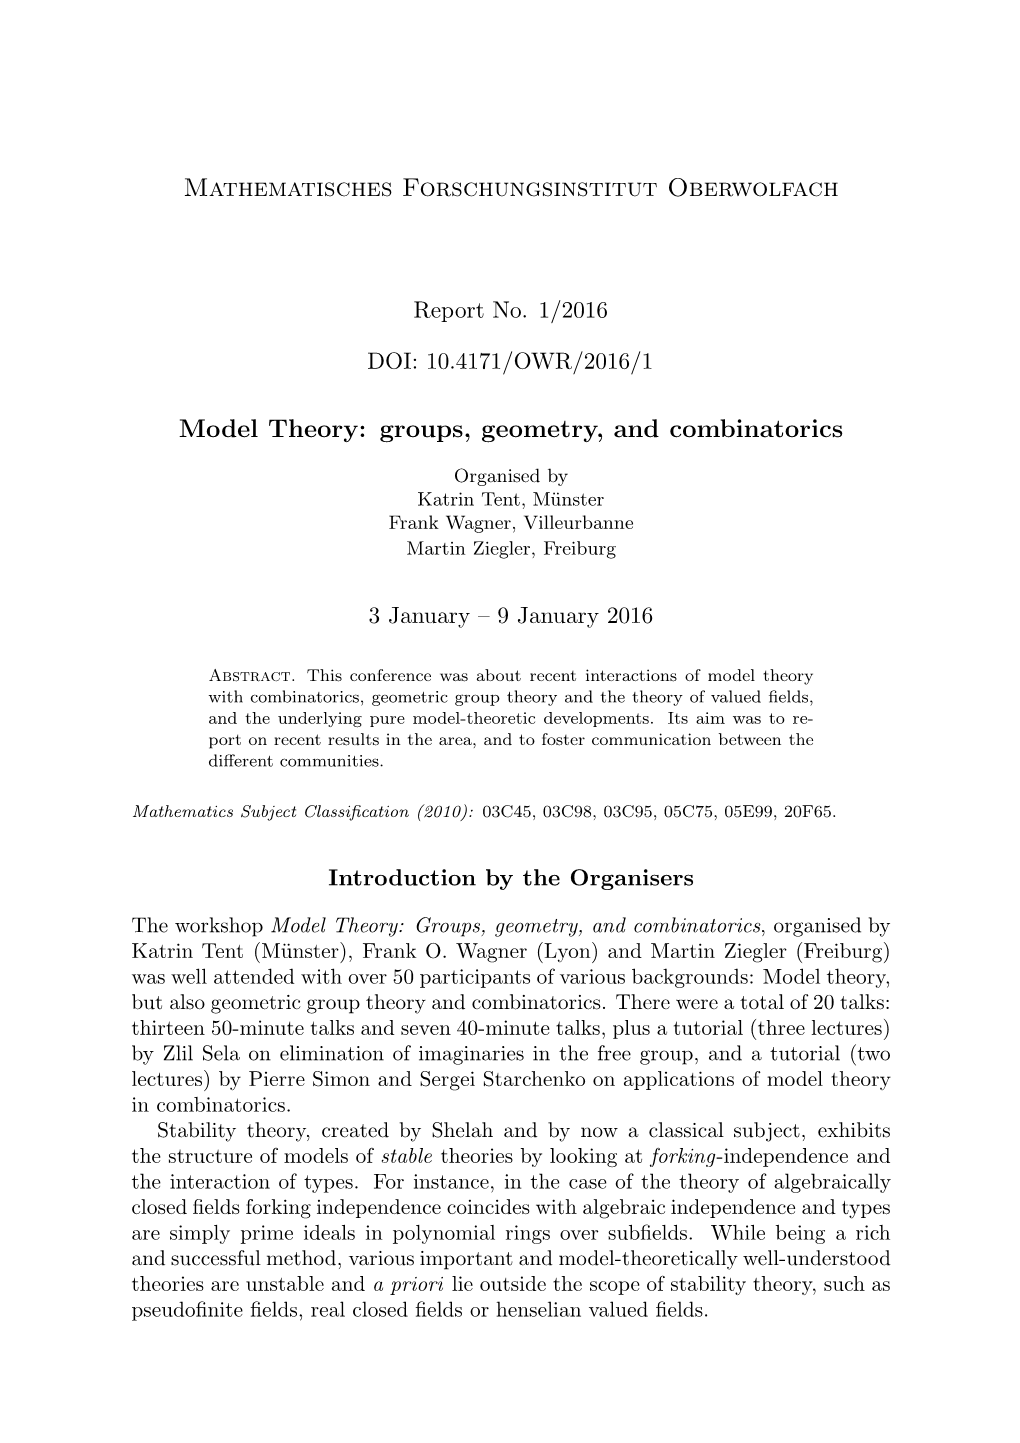 Model Theory: Groups, Geometry, and Combinatorics